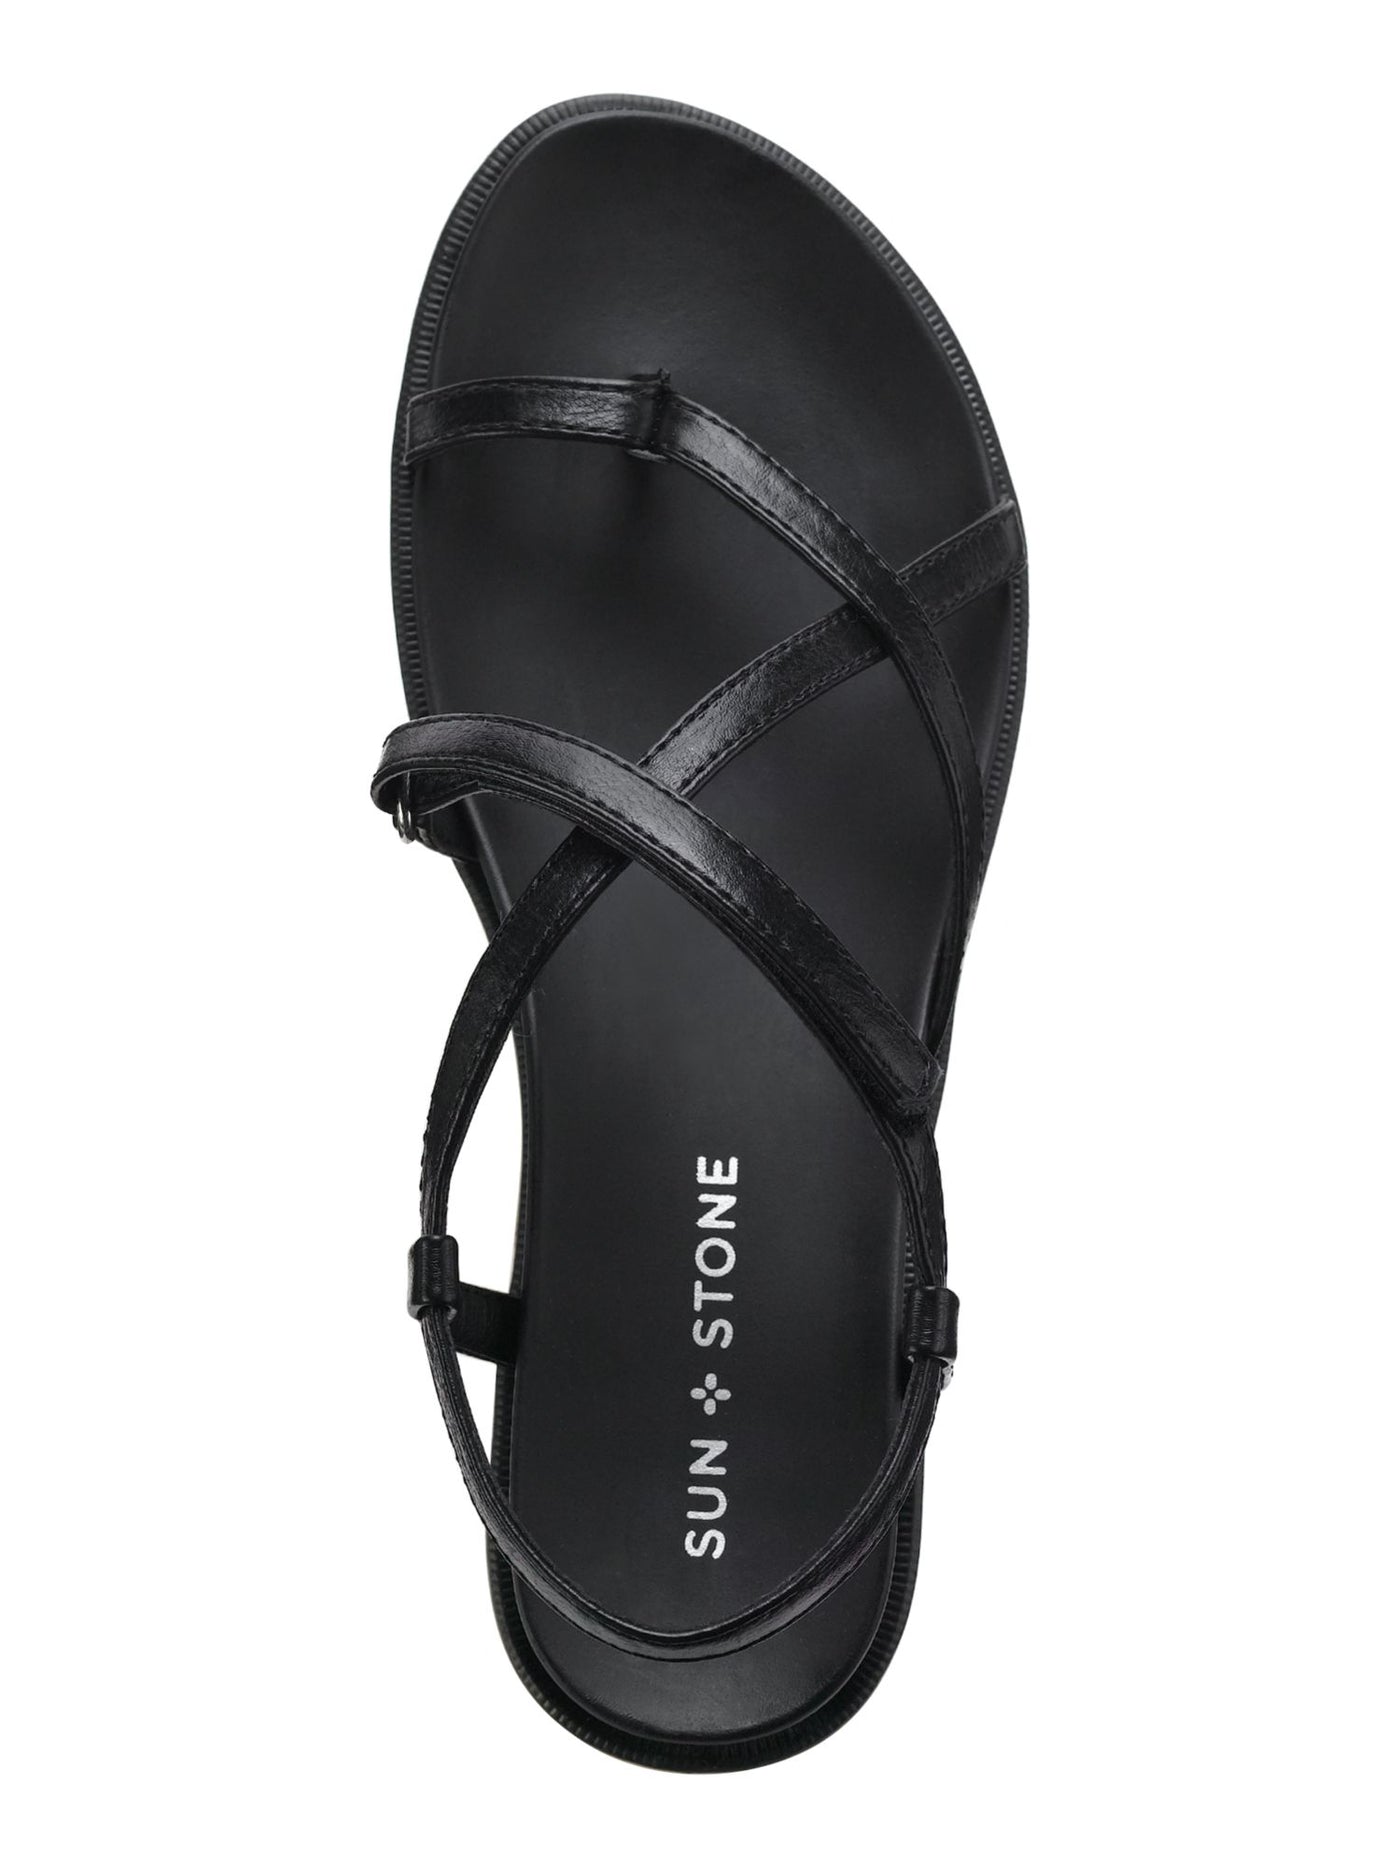 SUN STONE Womens Black Strappy Comfort Juune Round Toe Wedge Gladiator Sandals Shoes 9.5 M